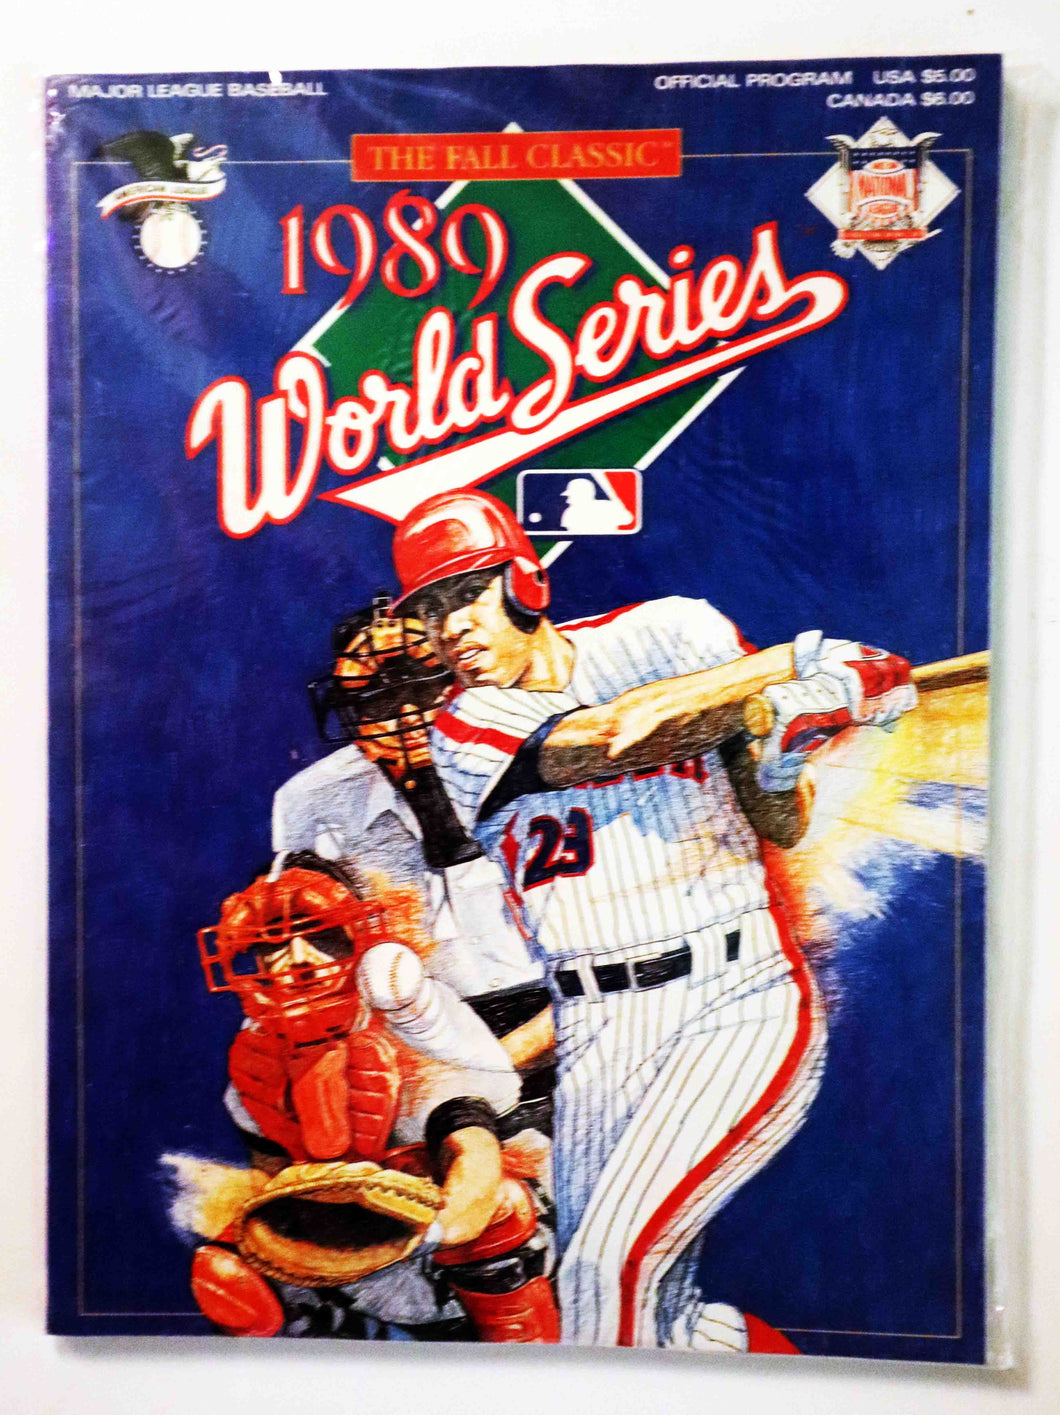 Sports Memorabilia Baseball - 1989 World Series Program - Giants Vs. A's - 